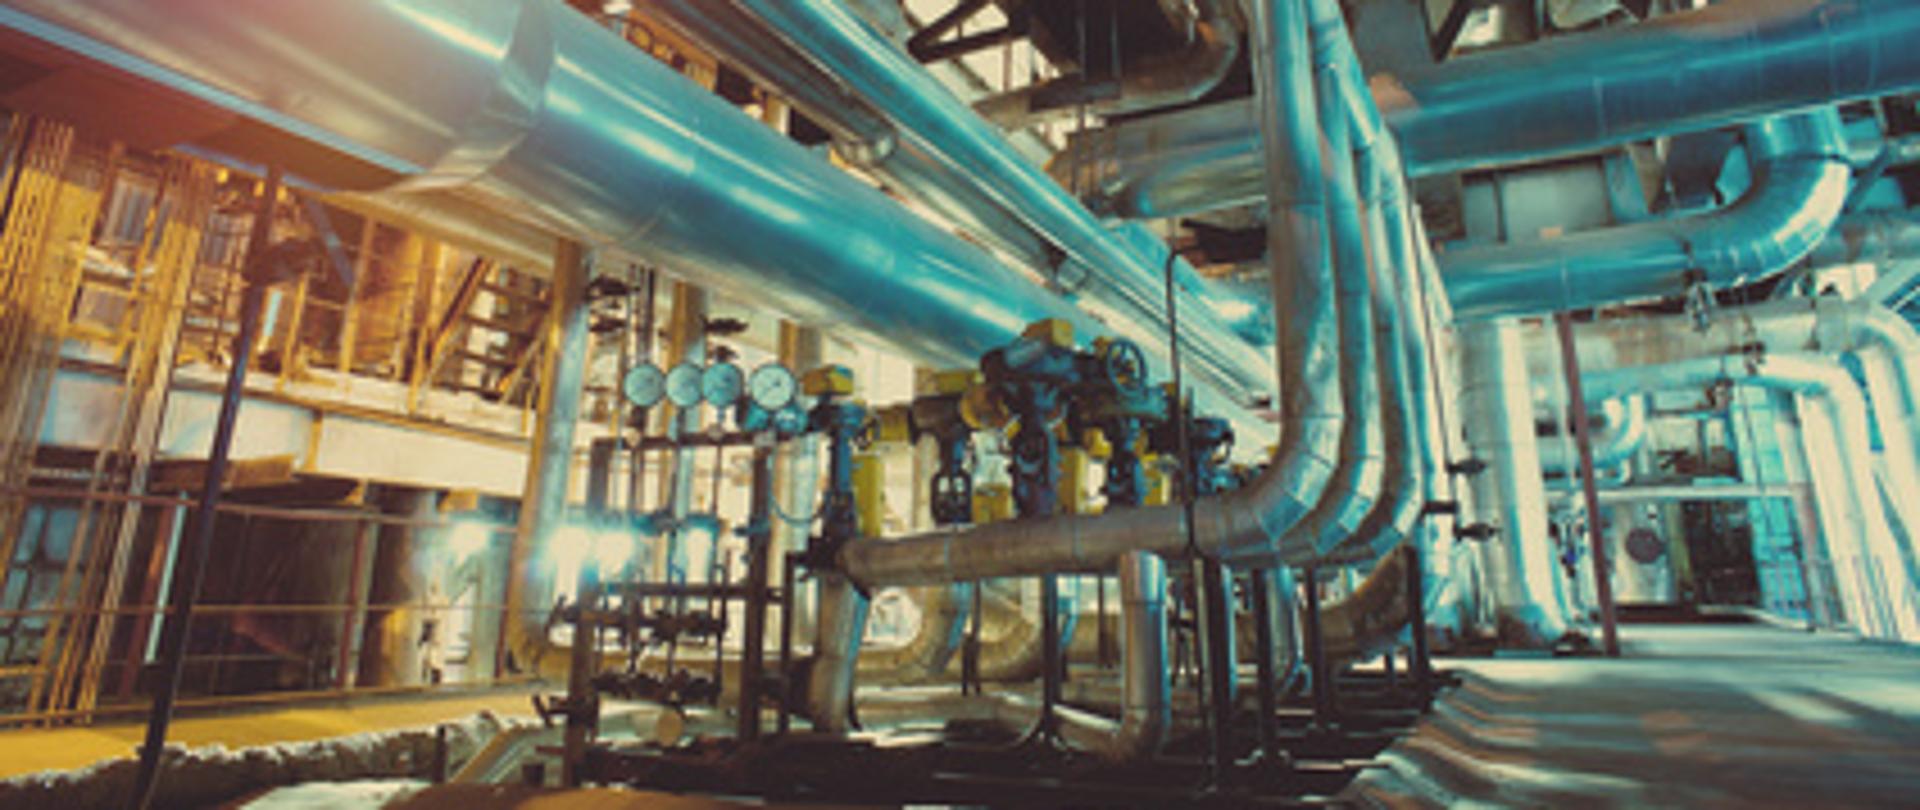 Industrial zone, Steel pipelines, valves and ladders
